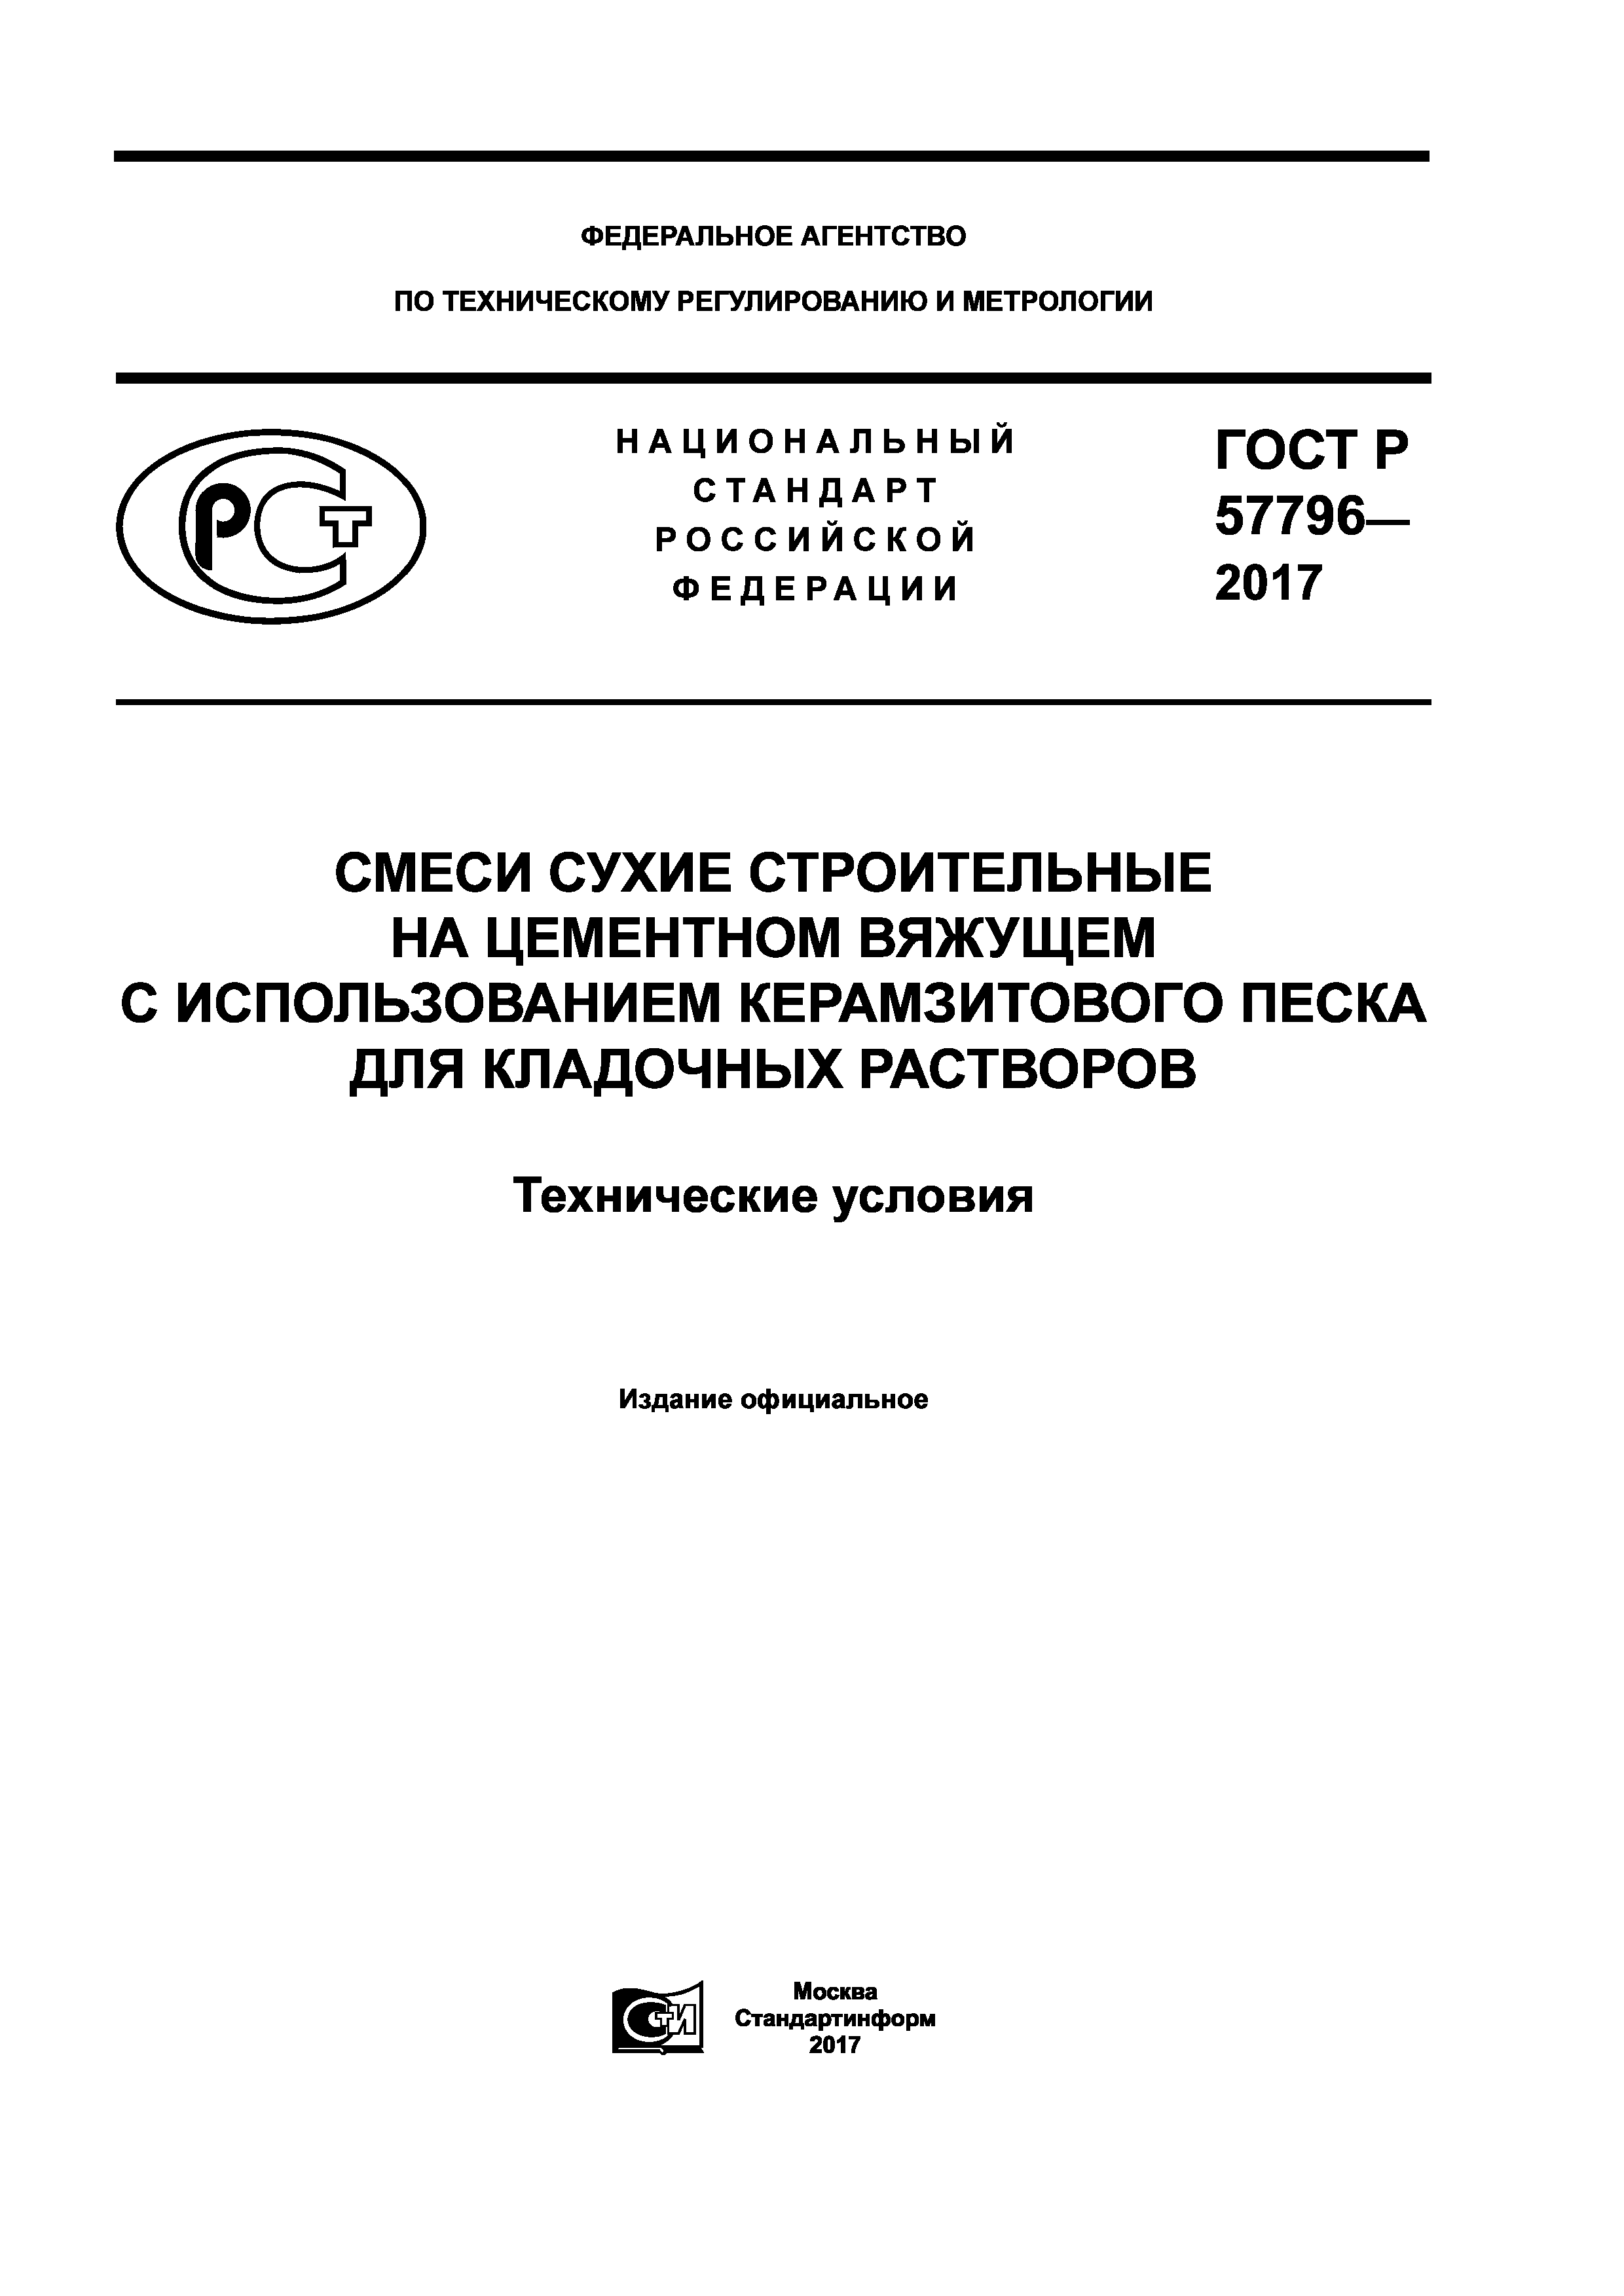 ГОСТ Р 57796-2017